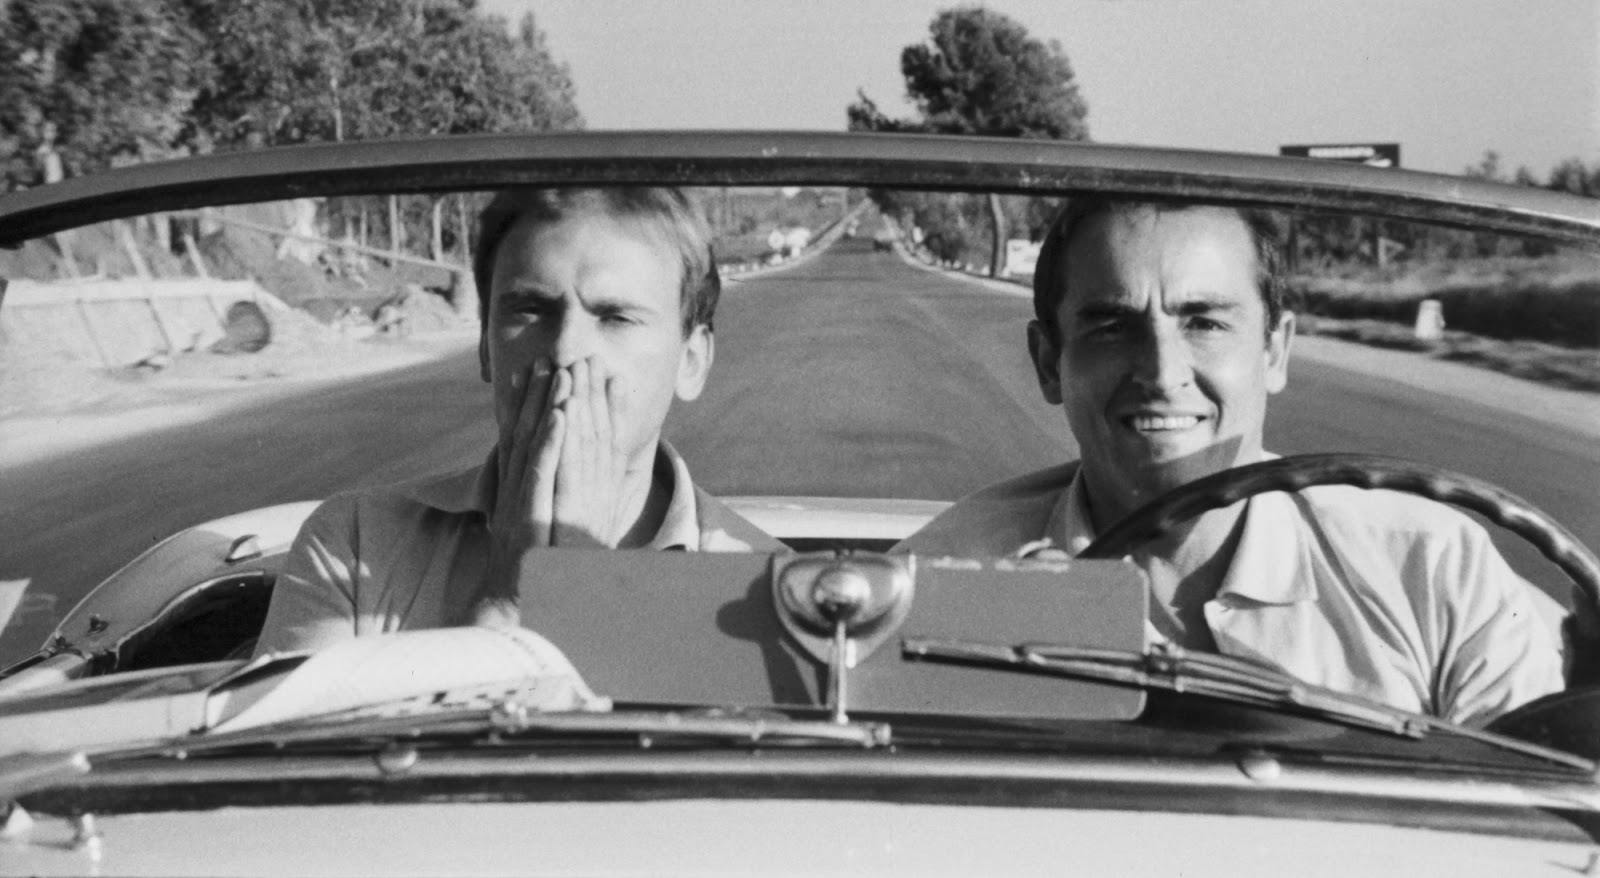 Bruno (Gassman, driving) tells Roberto (Trintignant), “That's what I like—no plans!”Janus/Criterion